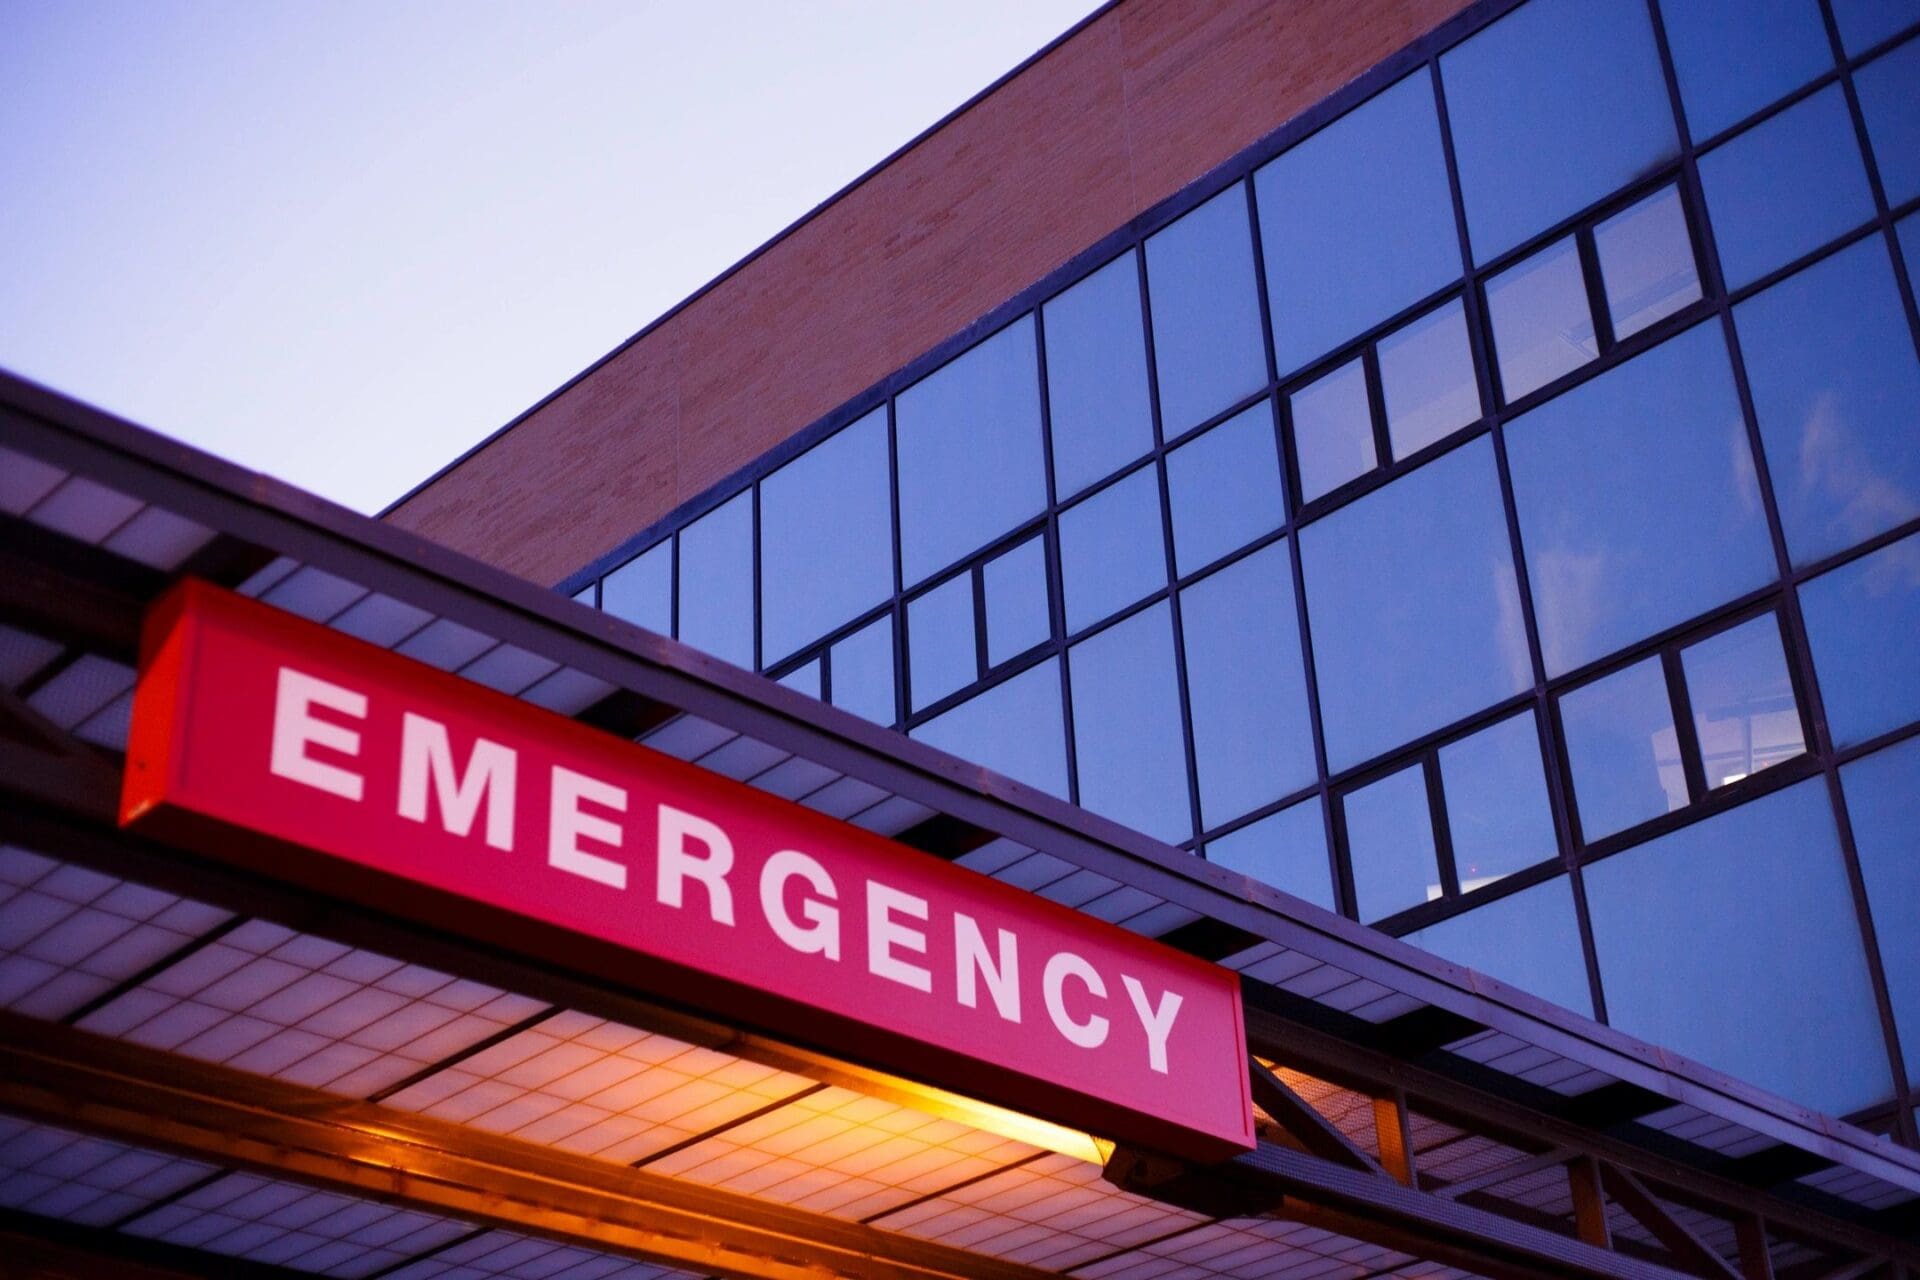 A hospital emergency sign is lit up at dusk.